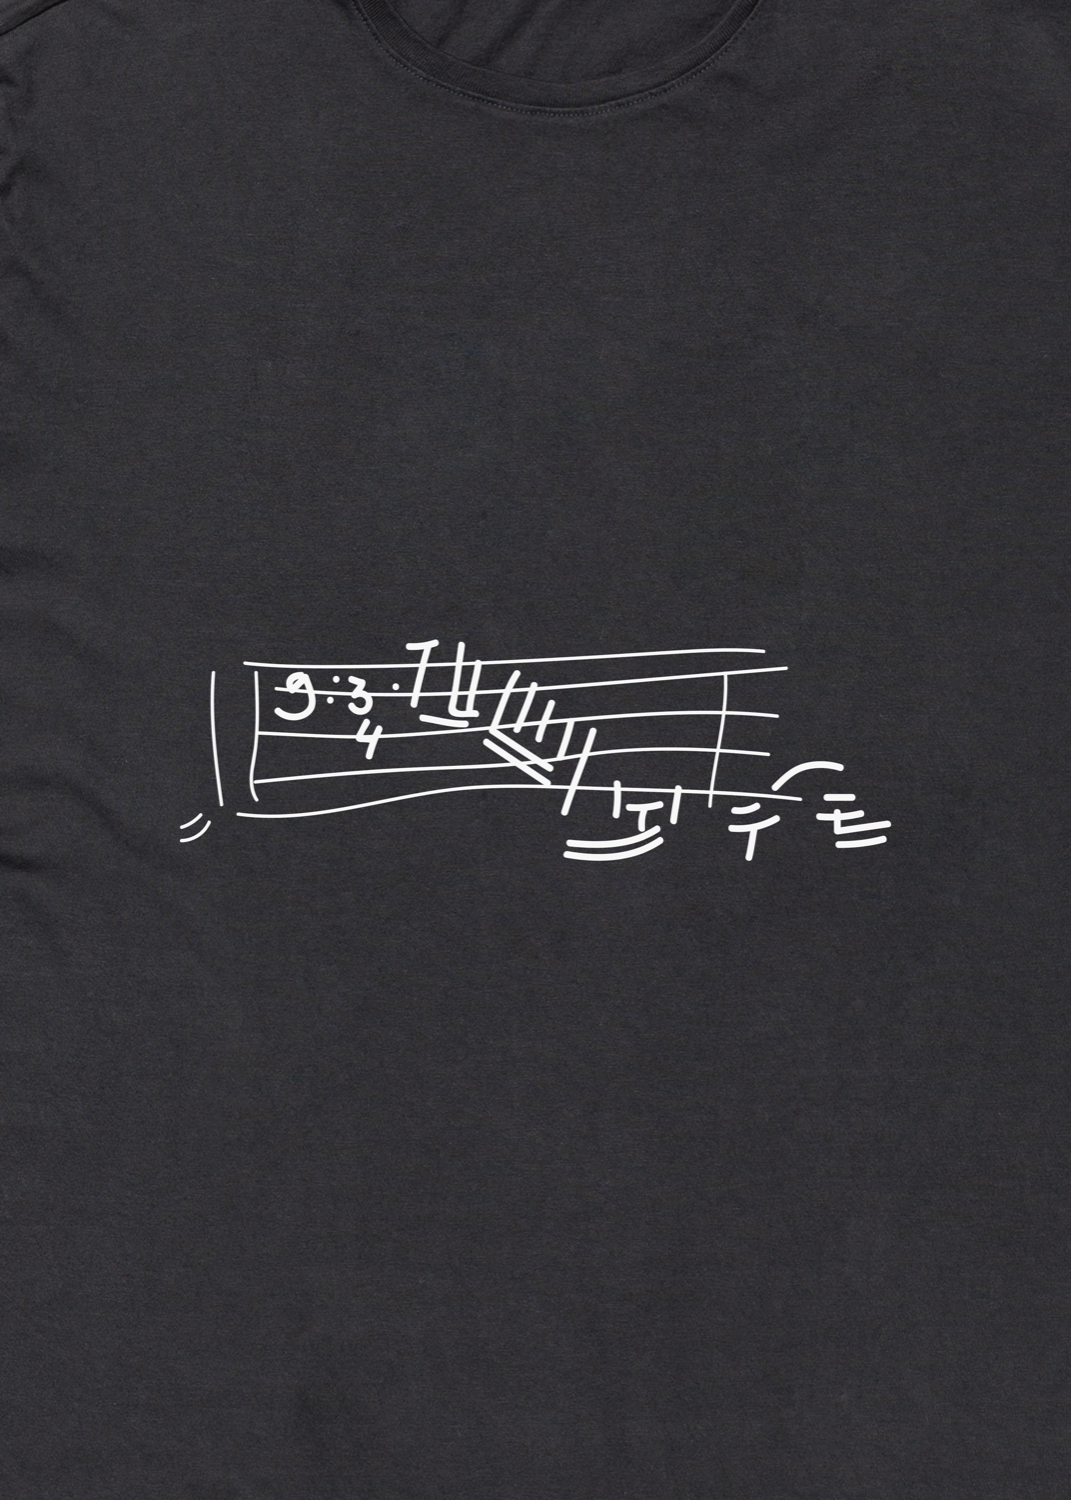 Camiseta - Música